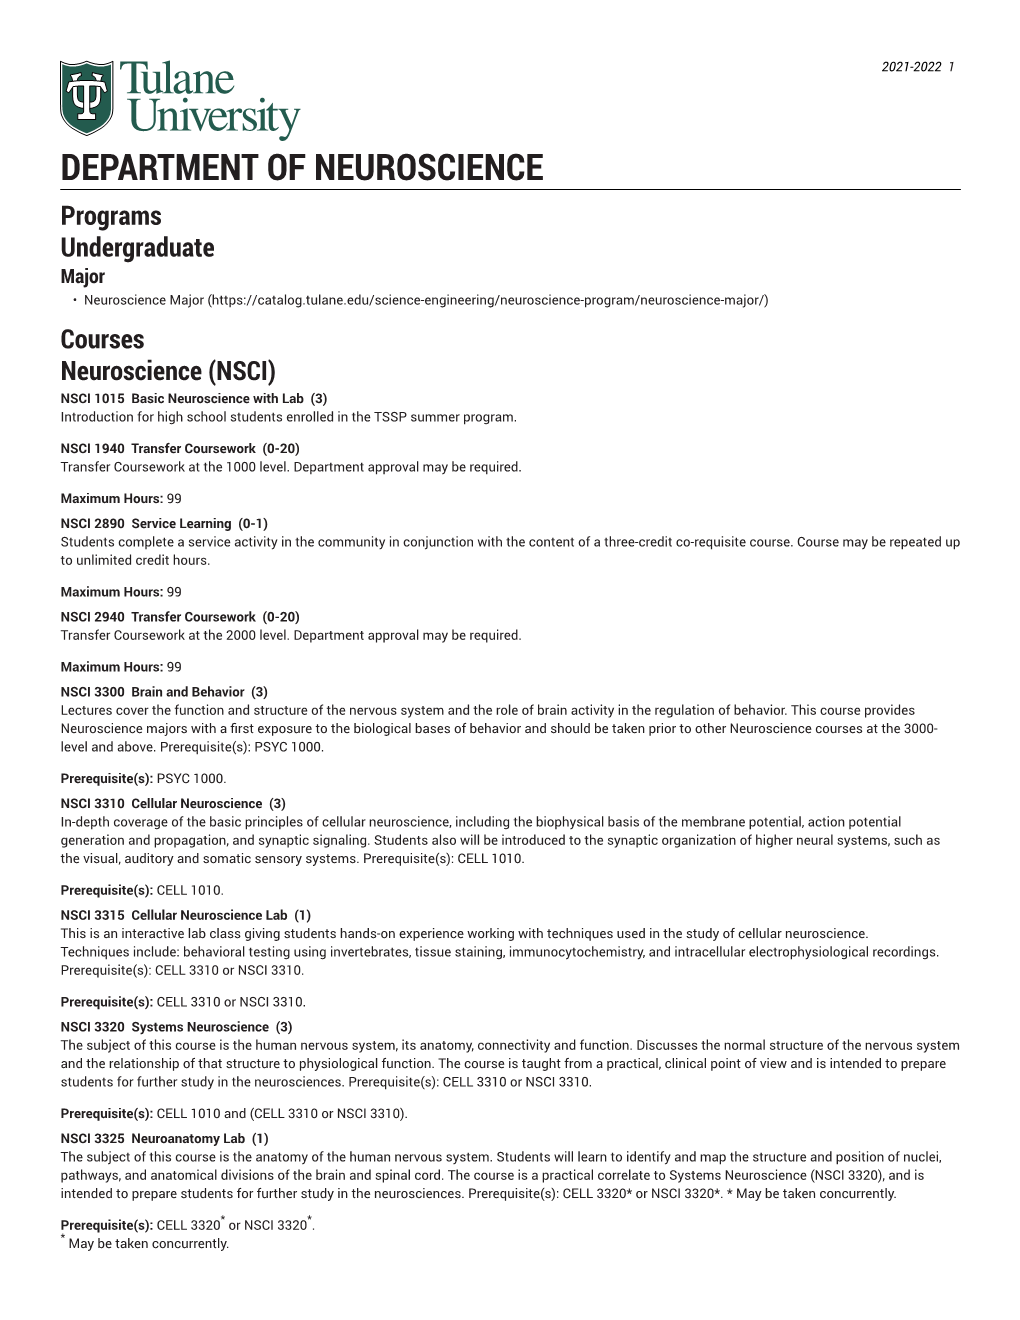 Department of Neuroscience